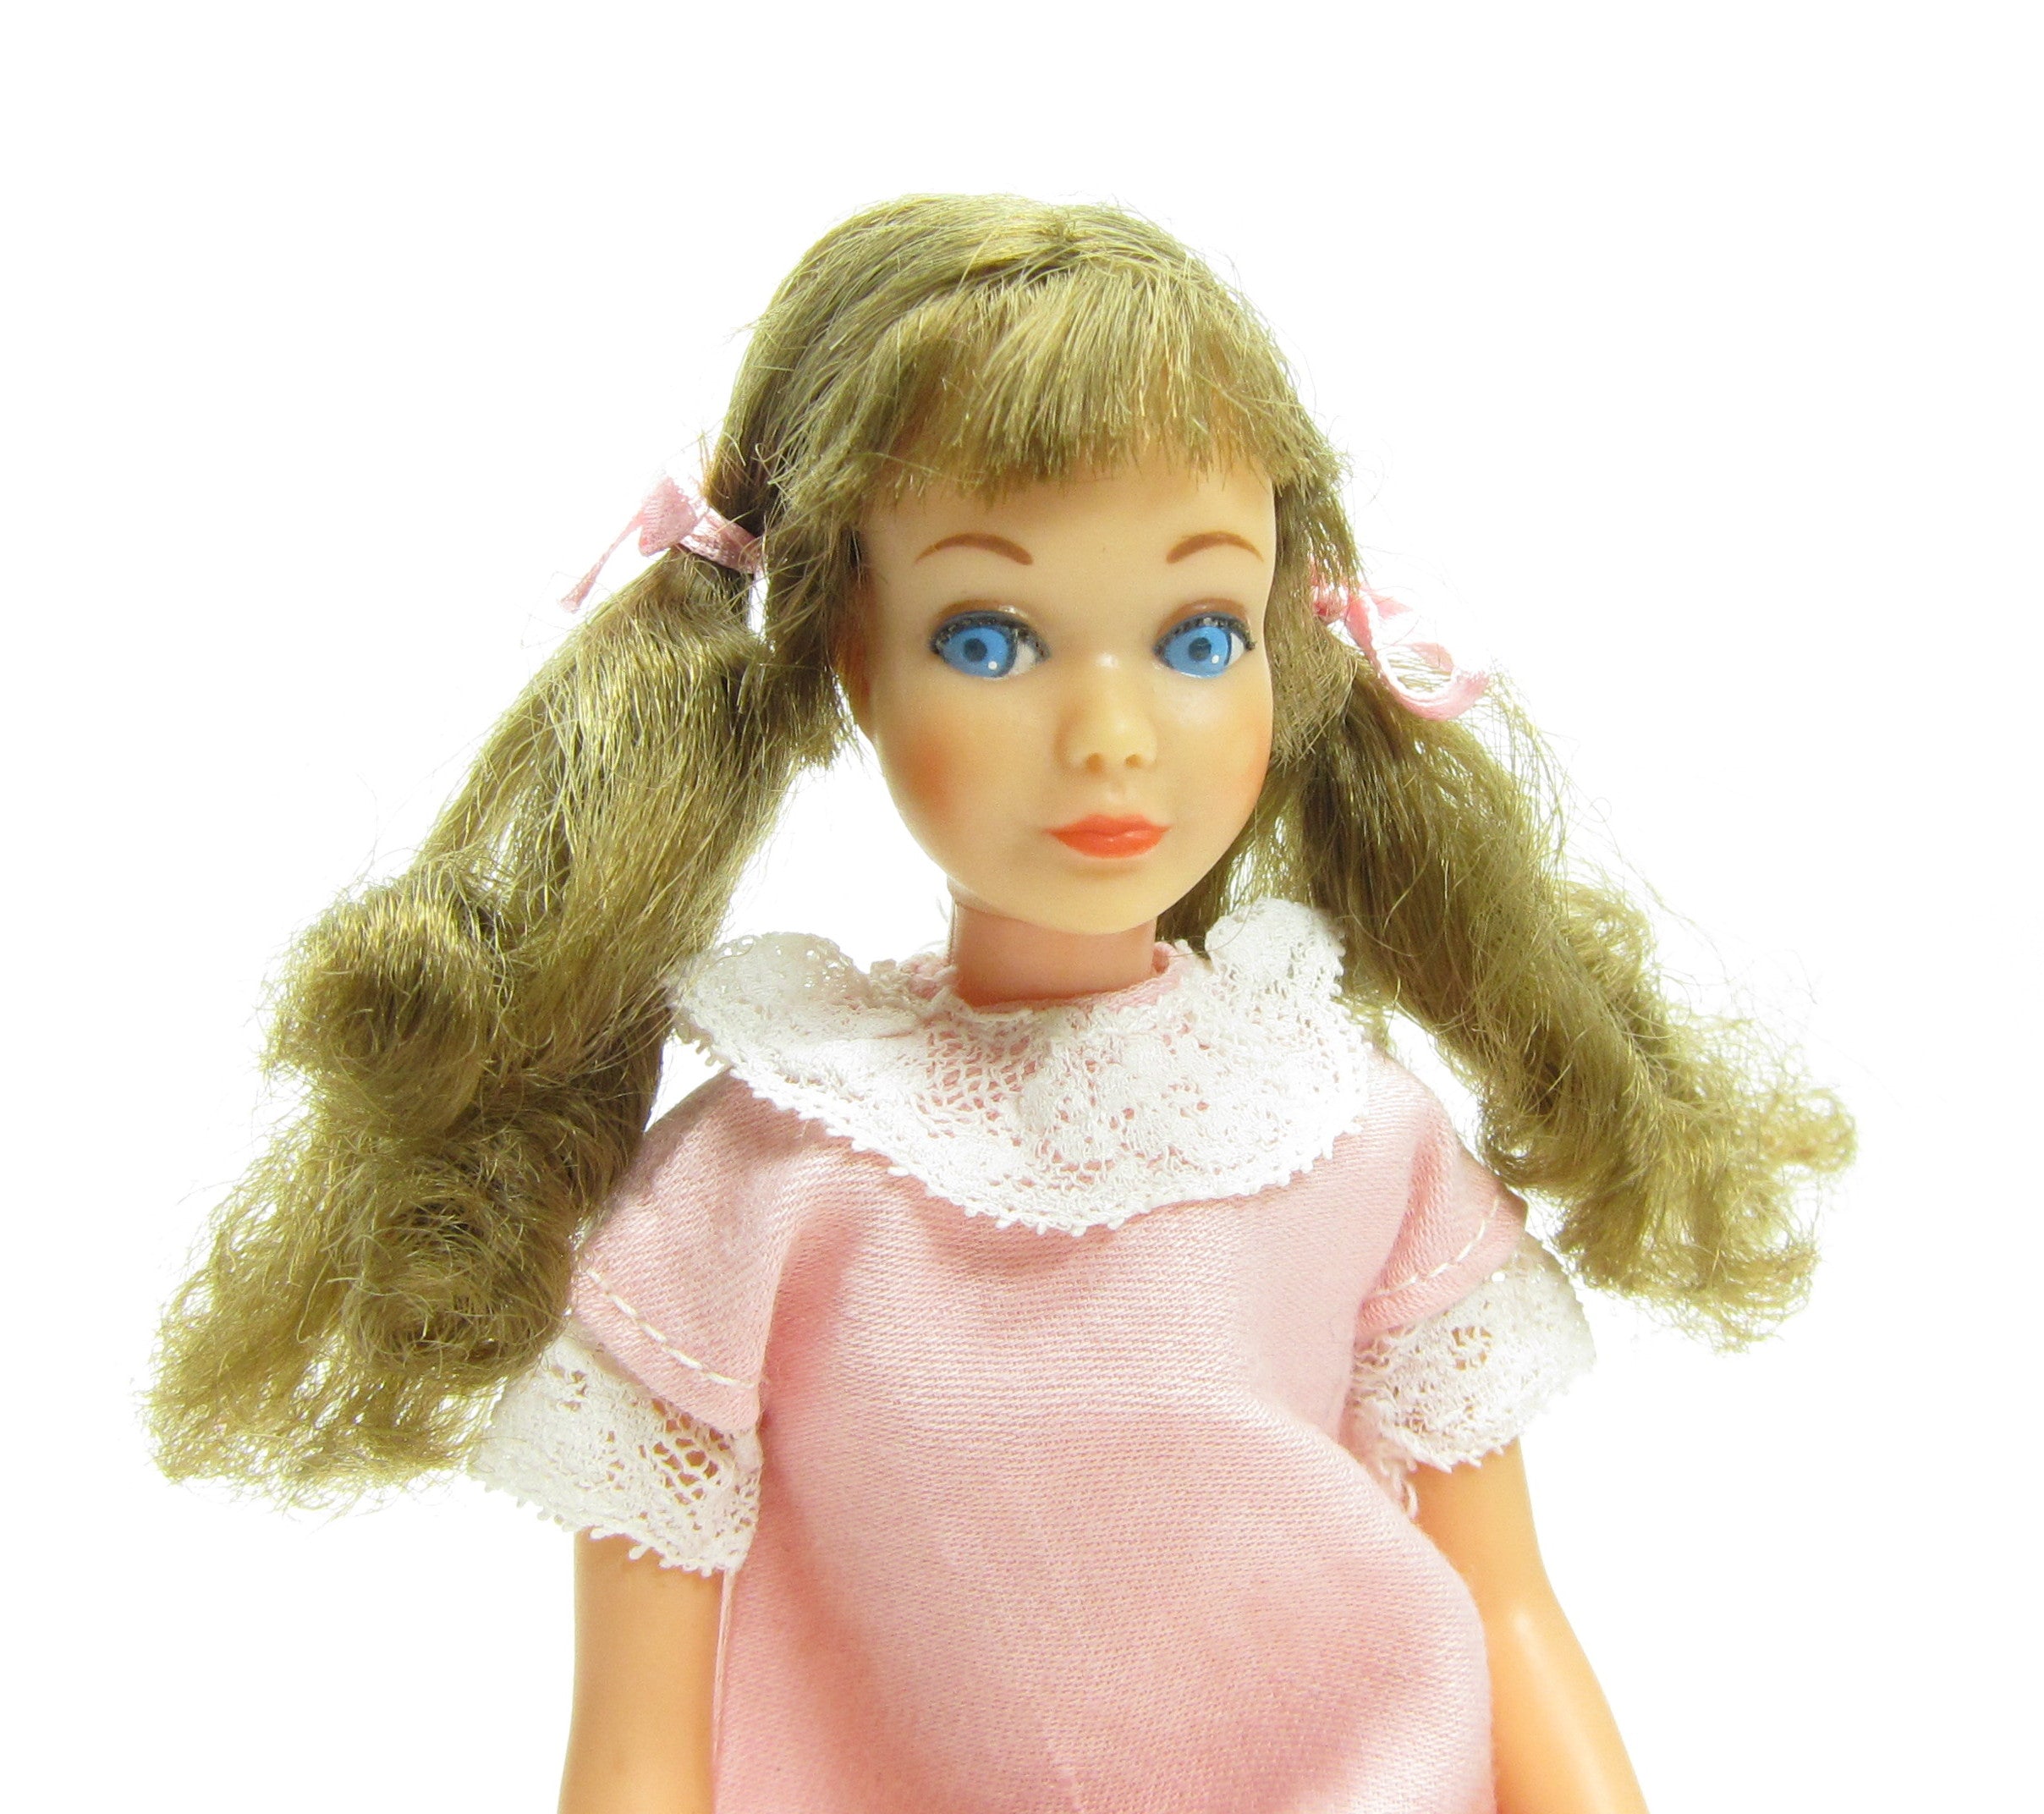 Vintage Twist and Turn Skipper doll with brown hair